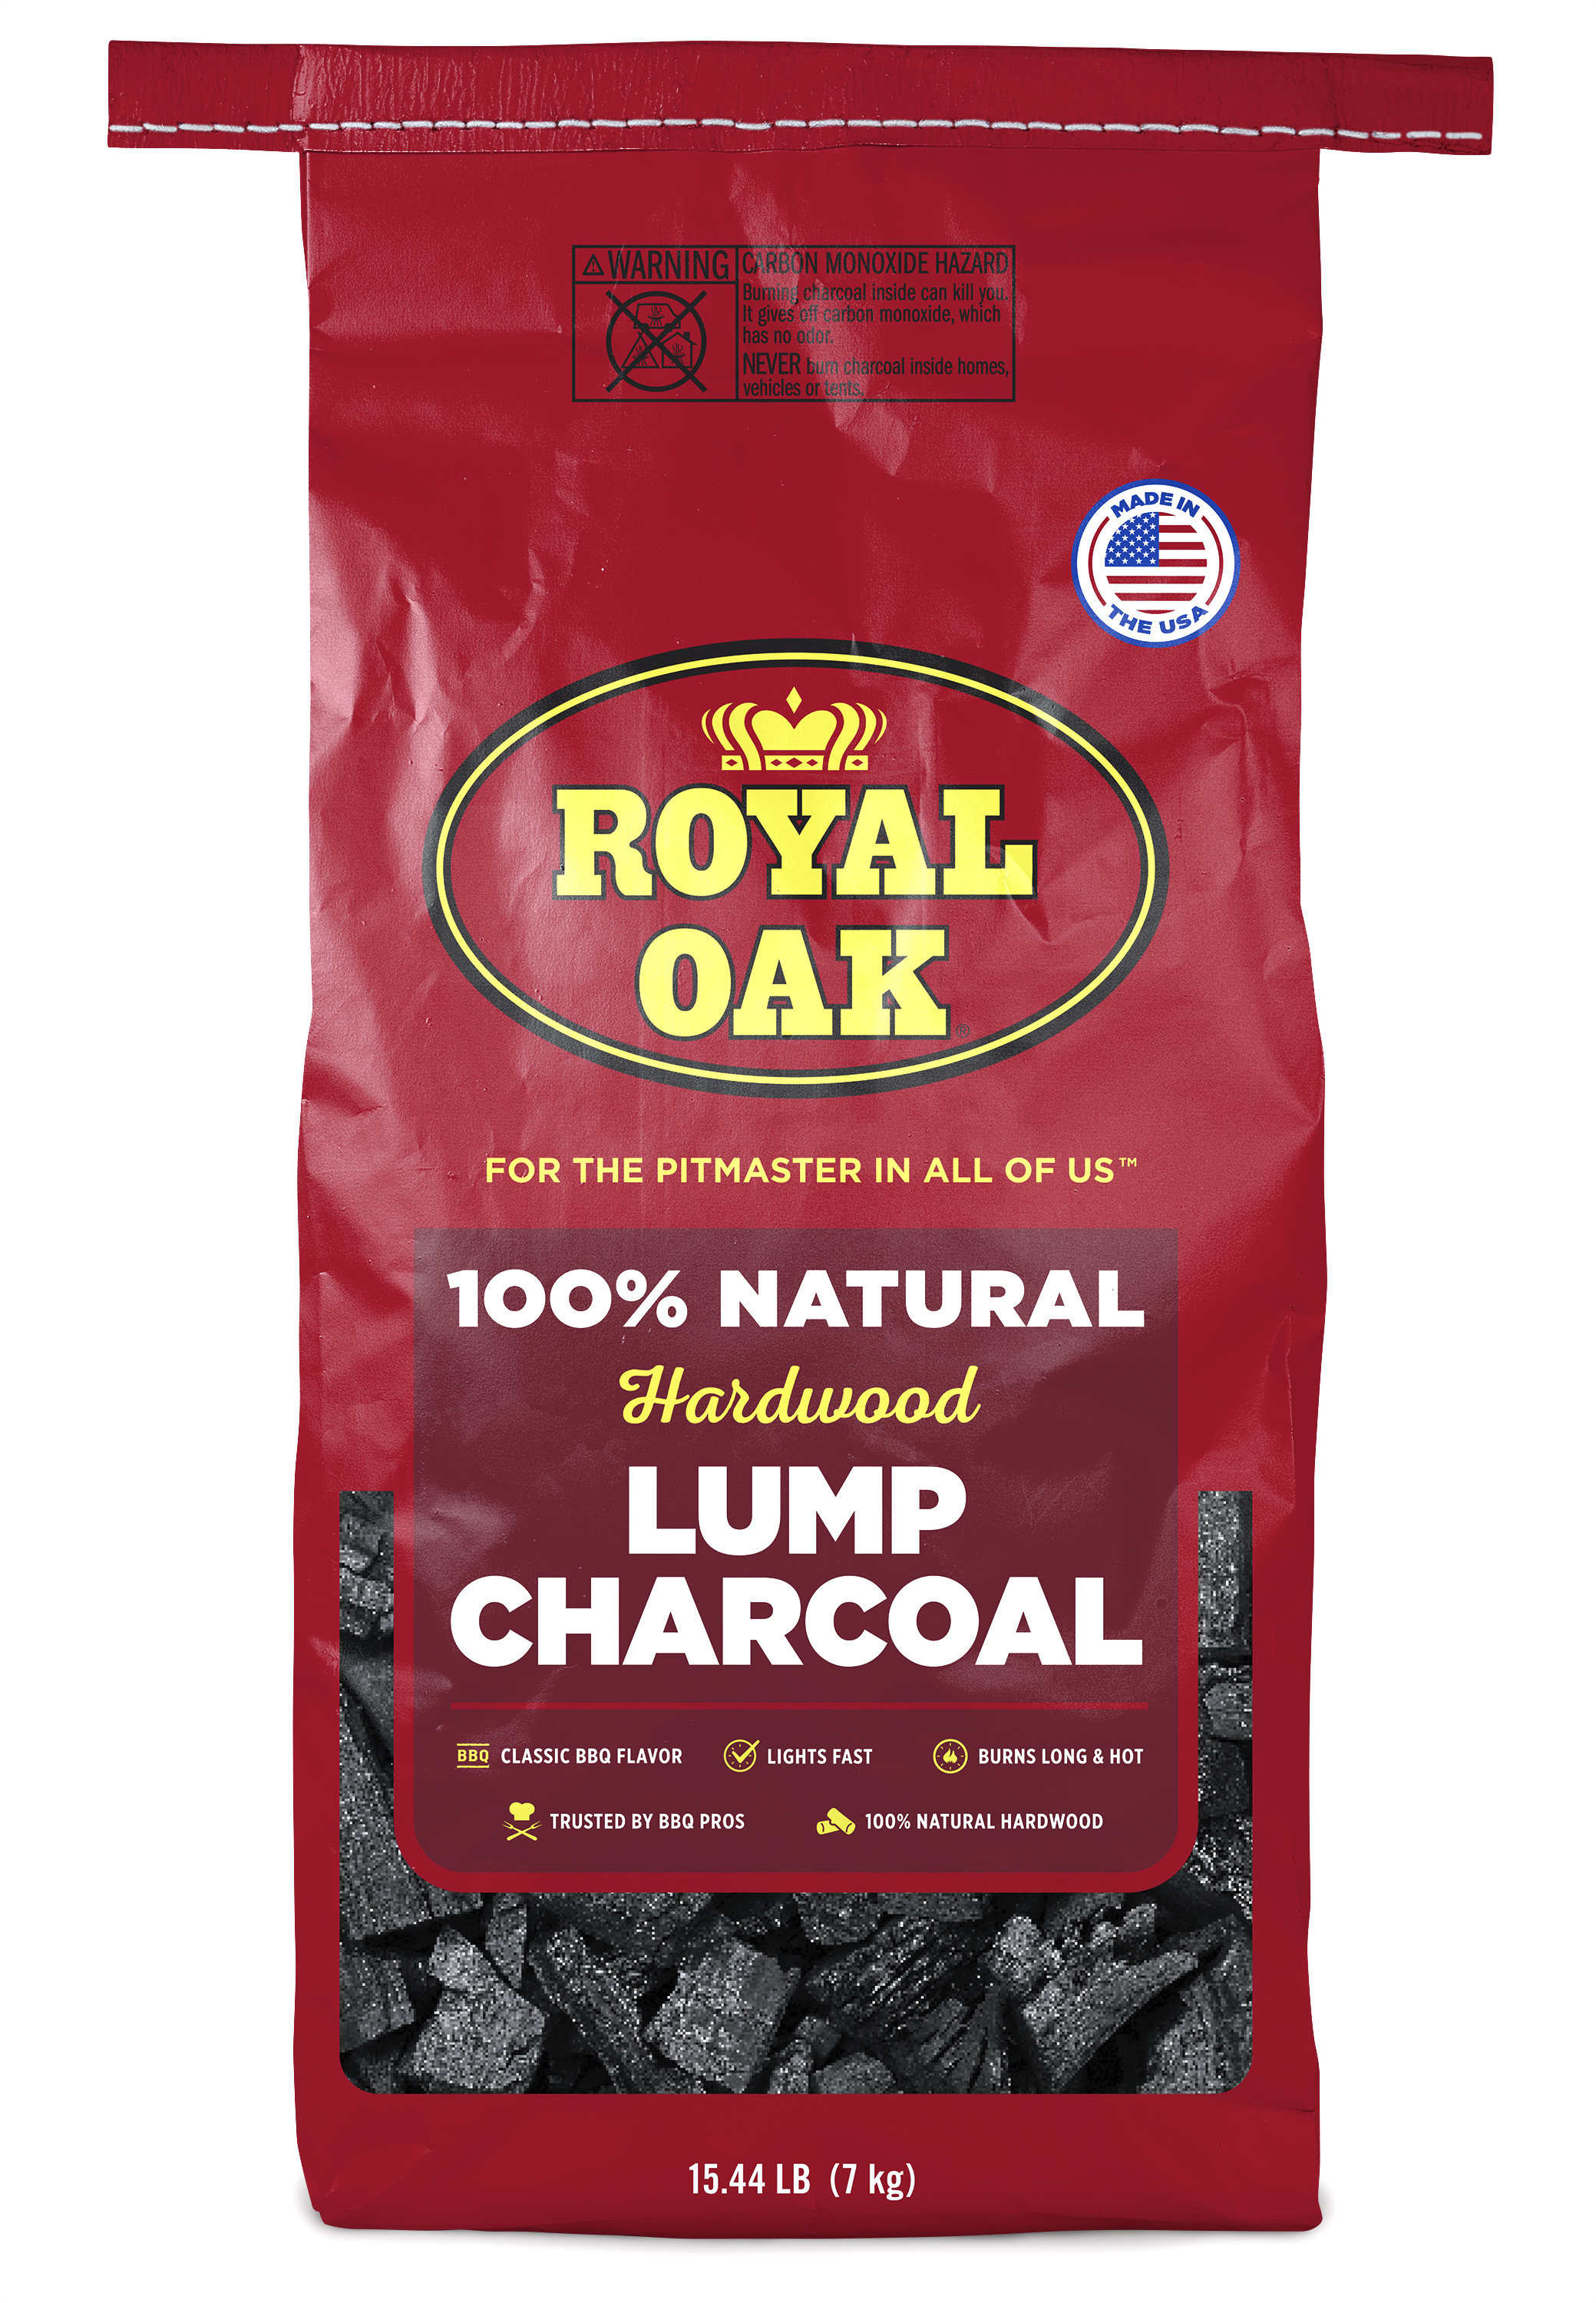 Royal Oak Lump Charcoal, All Natural Hardwood Charcoal, 15.4 lbs - image 1 of 7